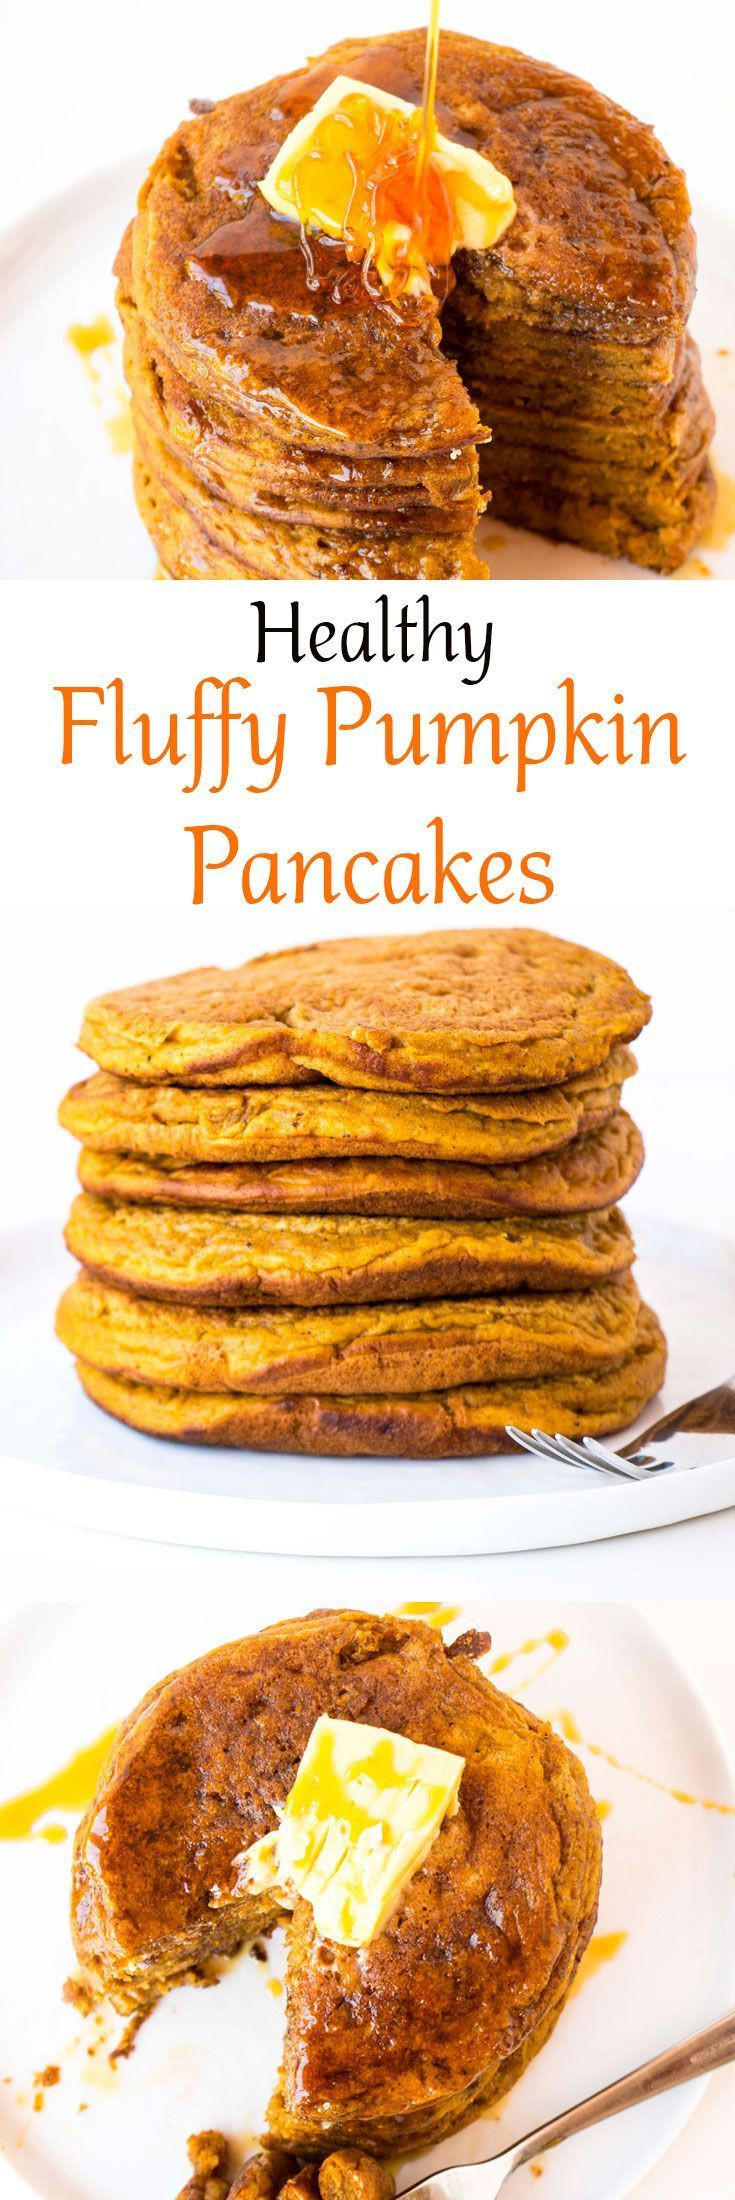 Healthy Fall Breakfast Recipes
 1000 ideas about Healthy Pumpkin Pancakes on Pinterest